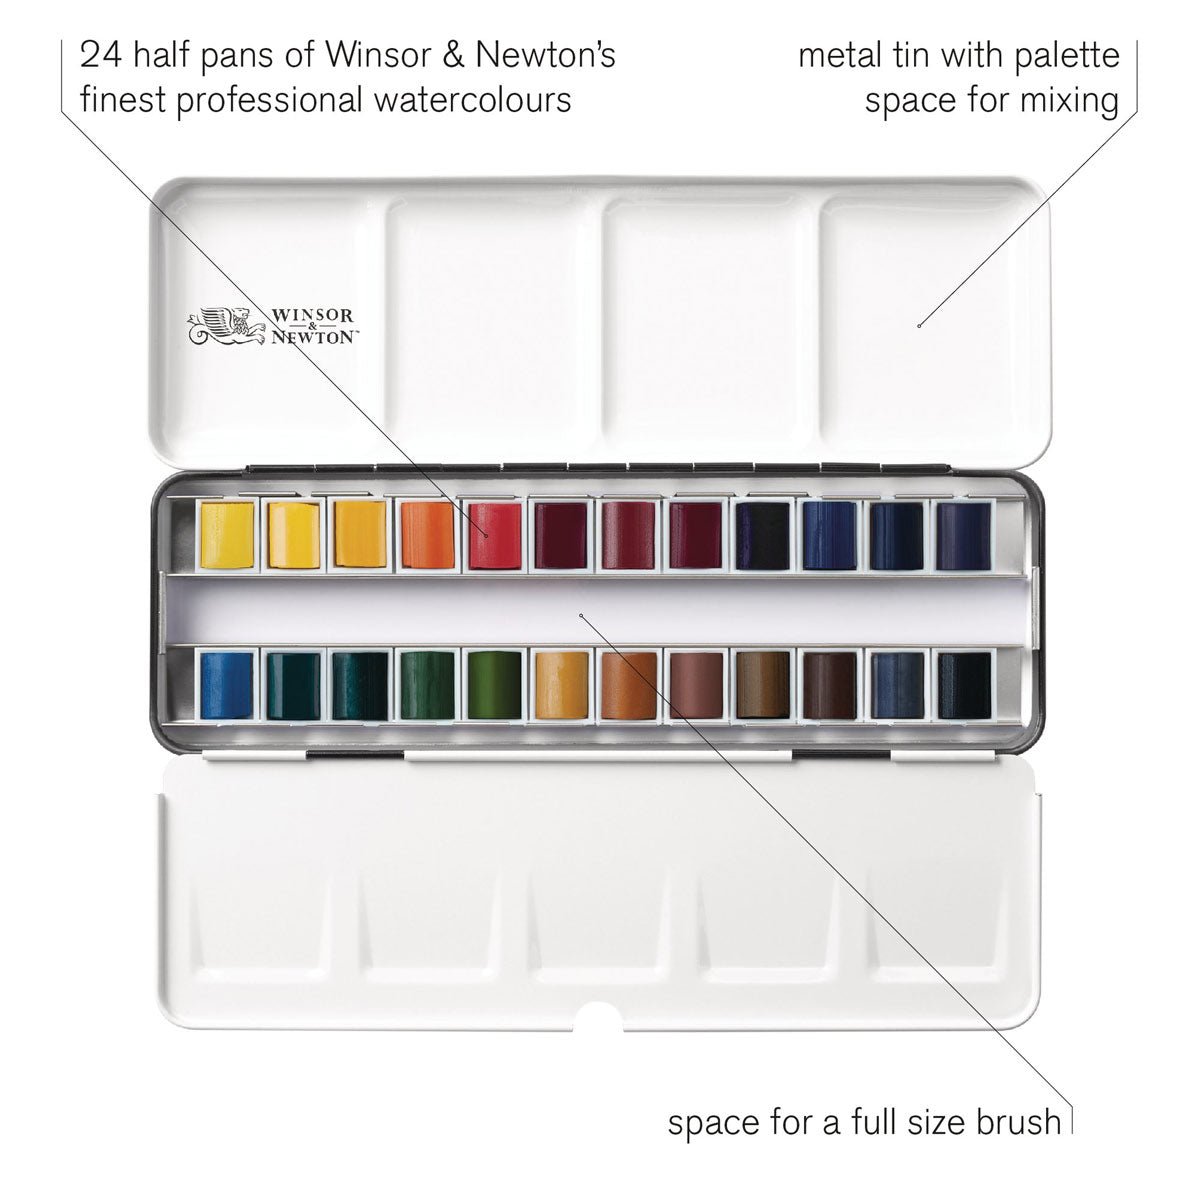 Winsor and Newton - Professional Artists' Watercolour - Lightweight Metal Box (24 Half Pans)